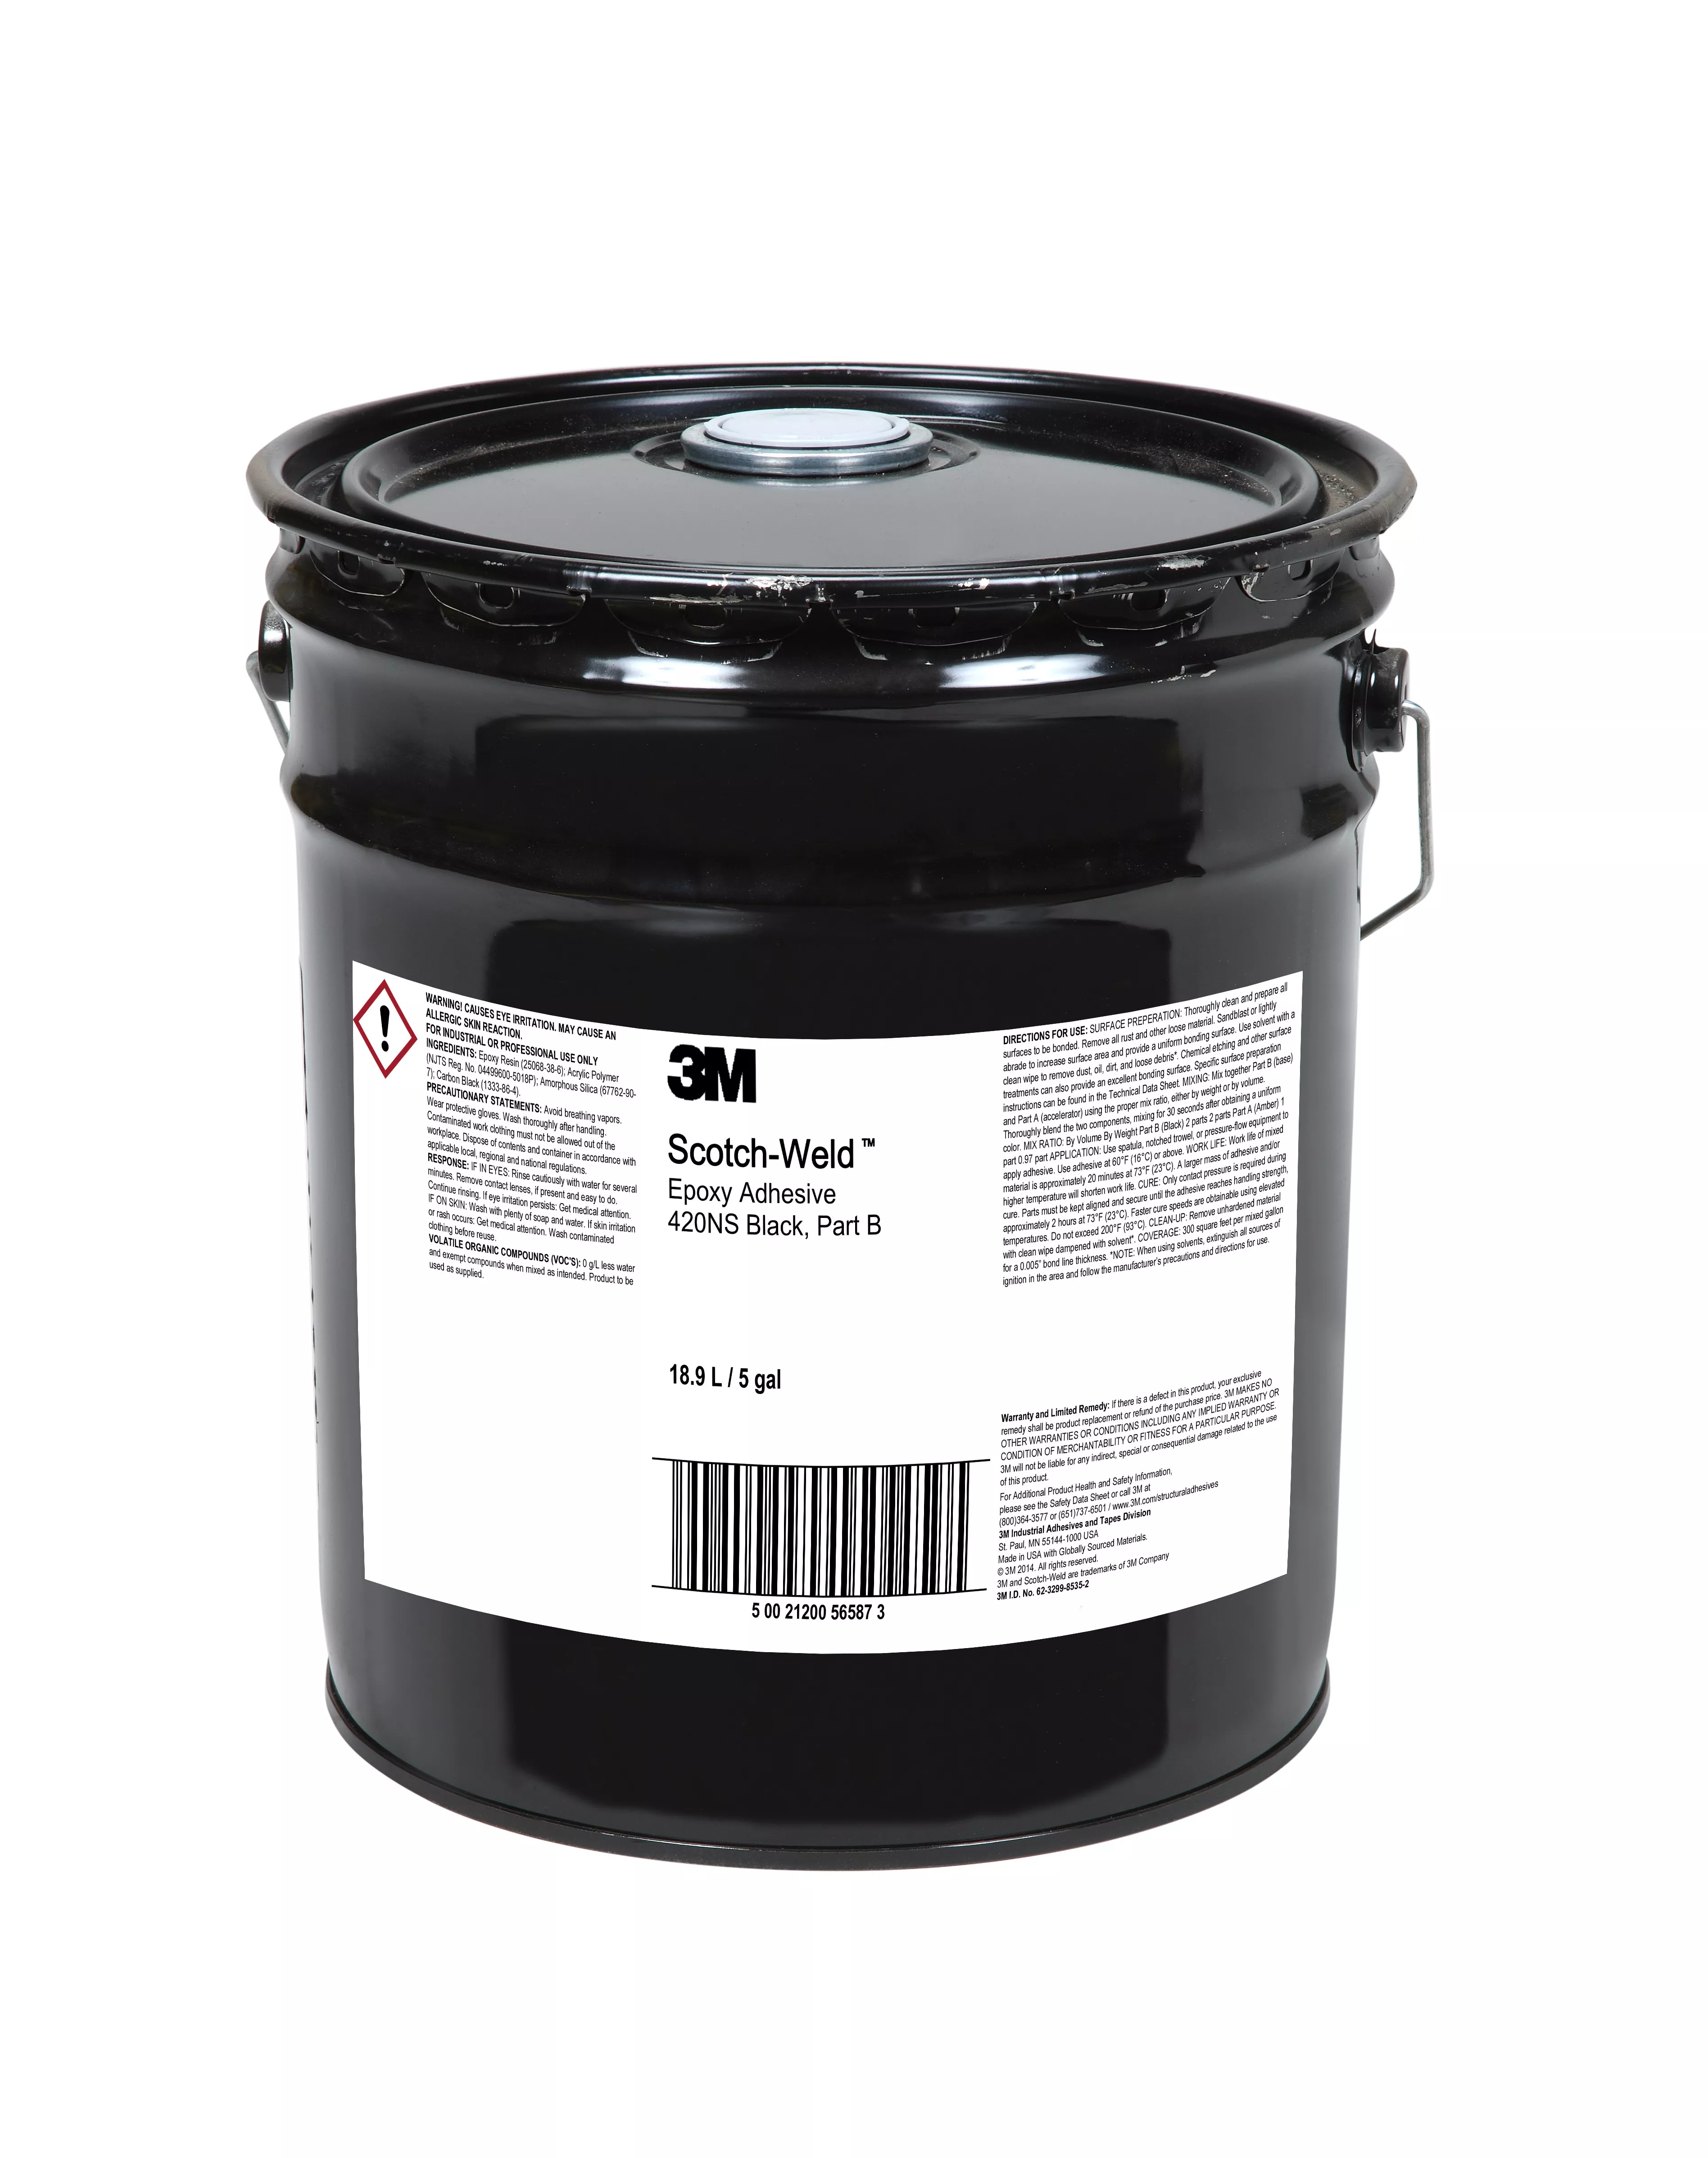 3M™ Scotch-Weld™ Epoxy Adhesive 420NS WS, Black, Part B, 5 Gallon
(Pail), Drum